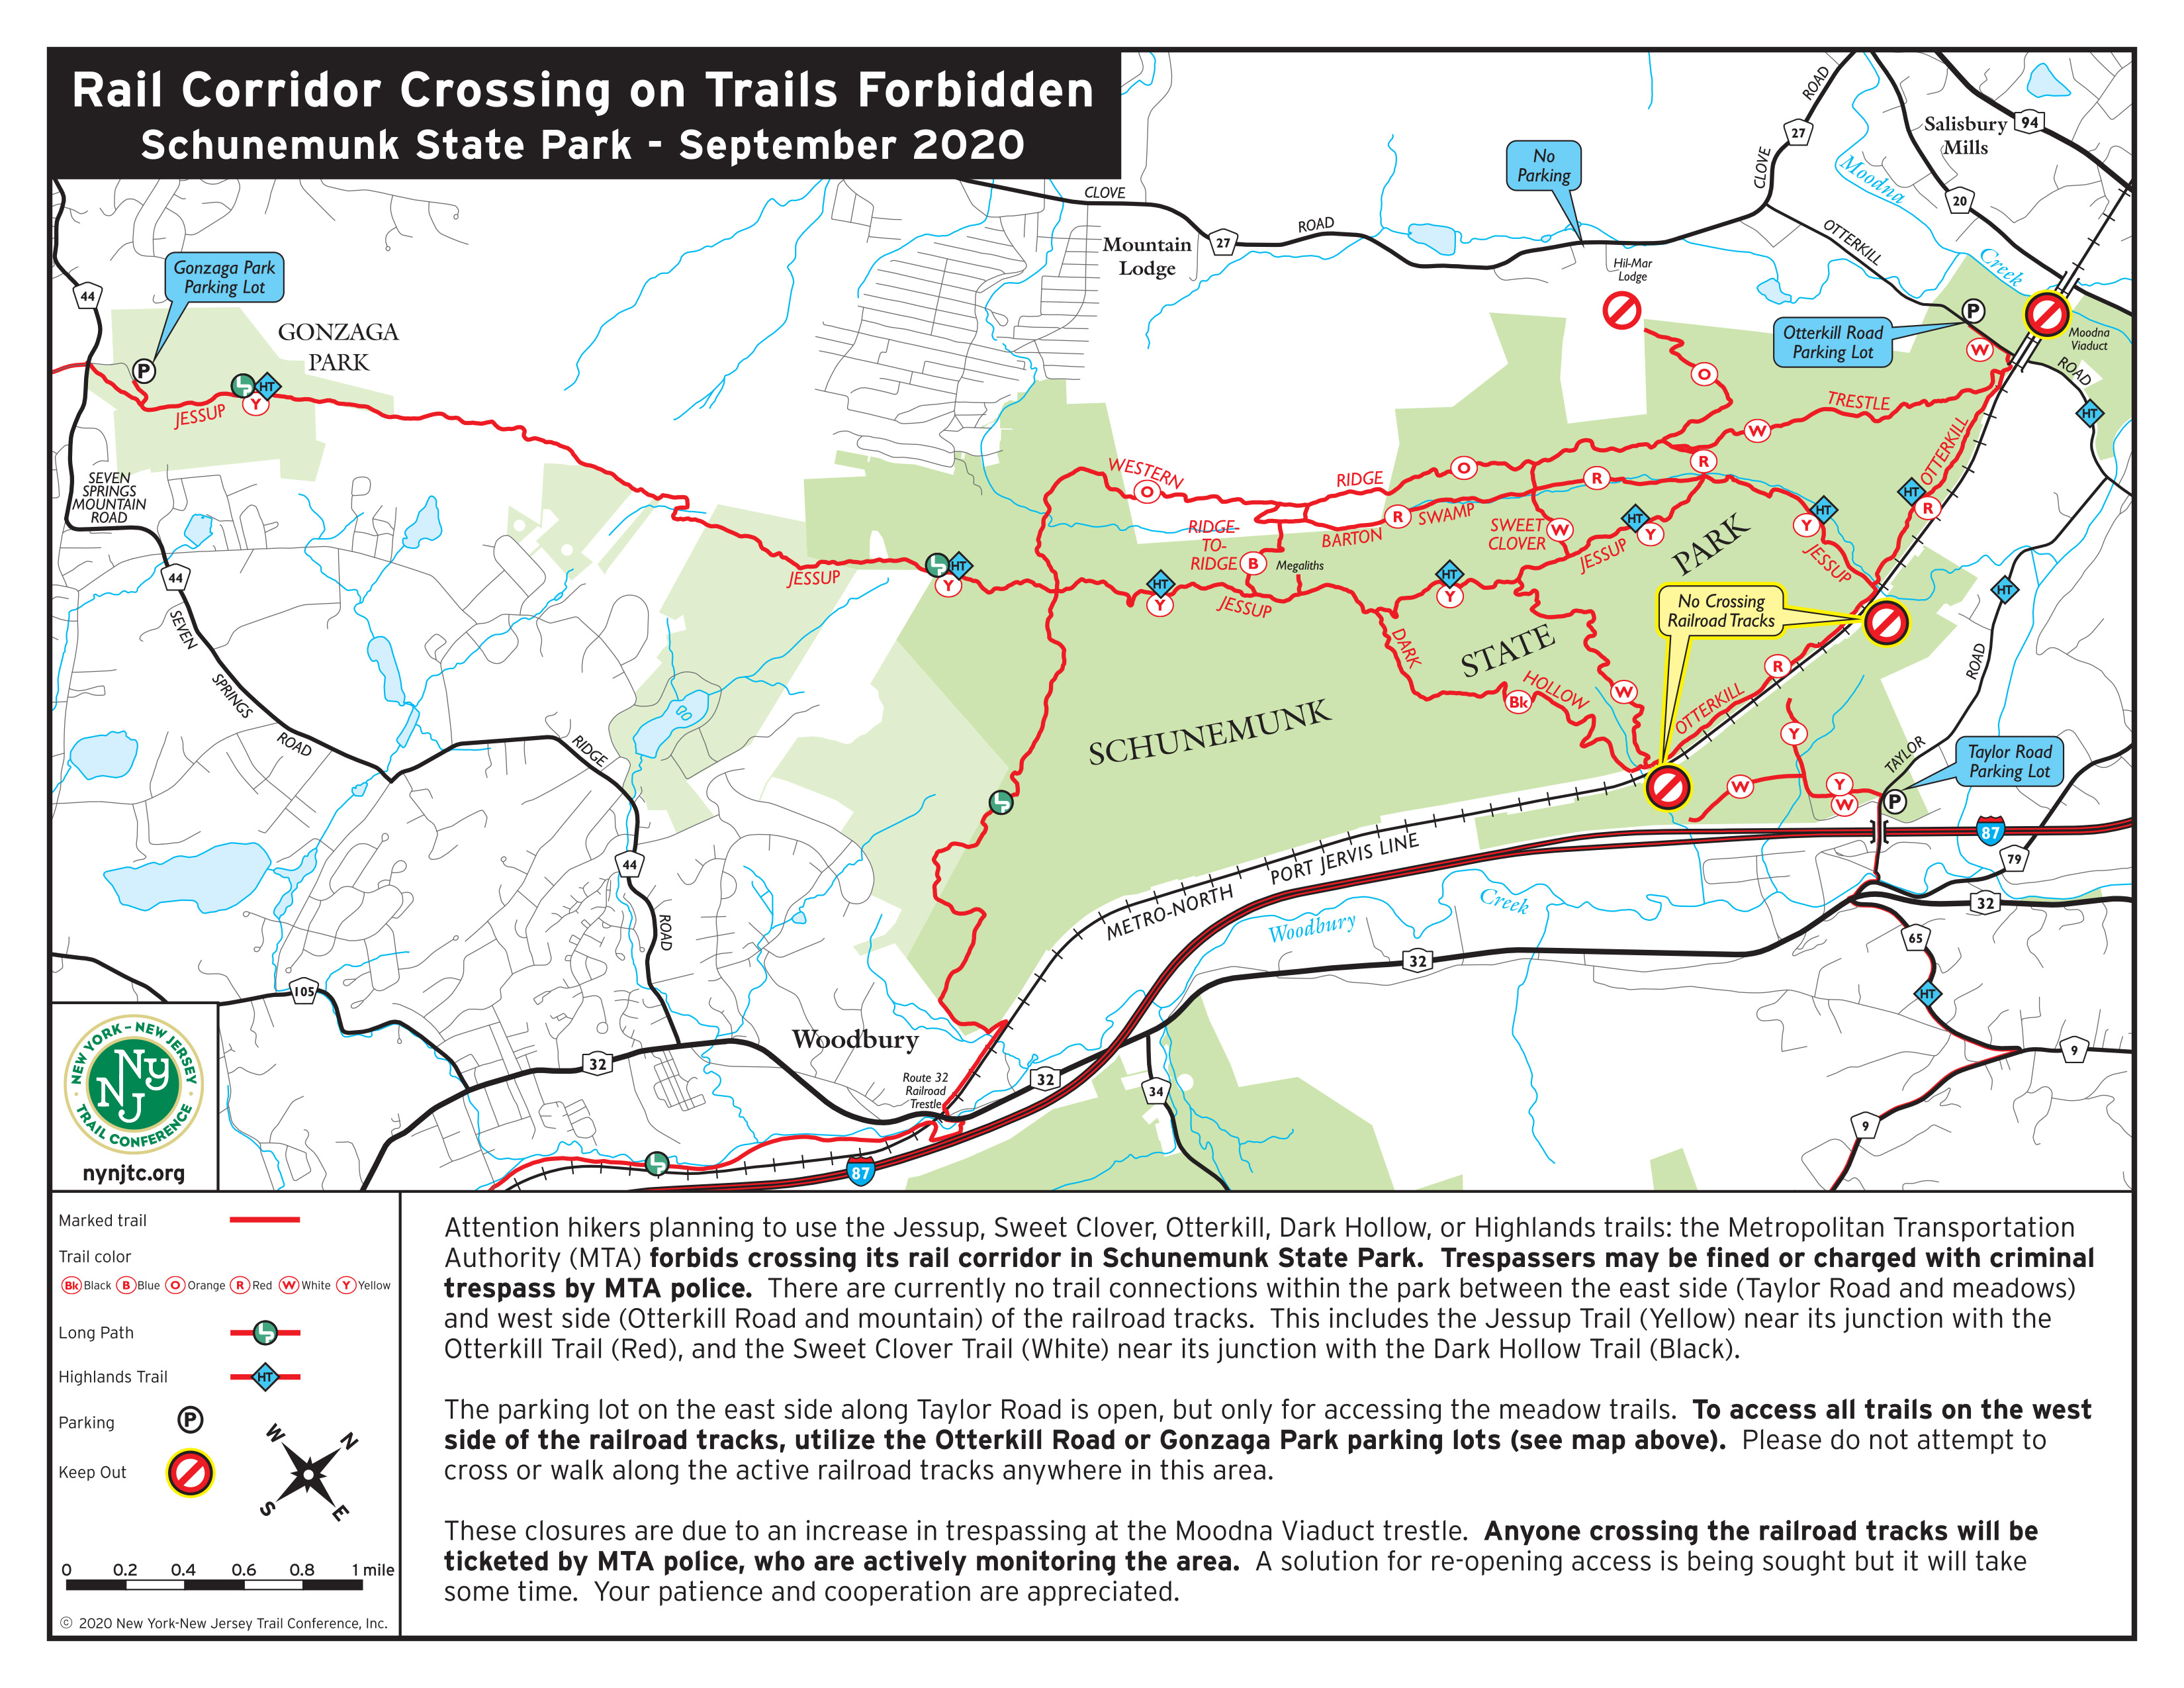 Schunemunk State Park: Rail Corridor Closure